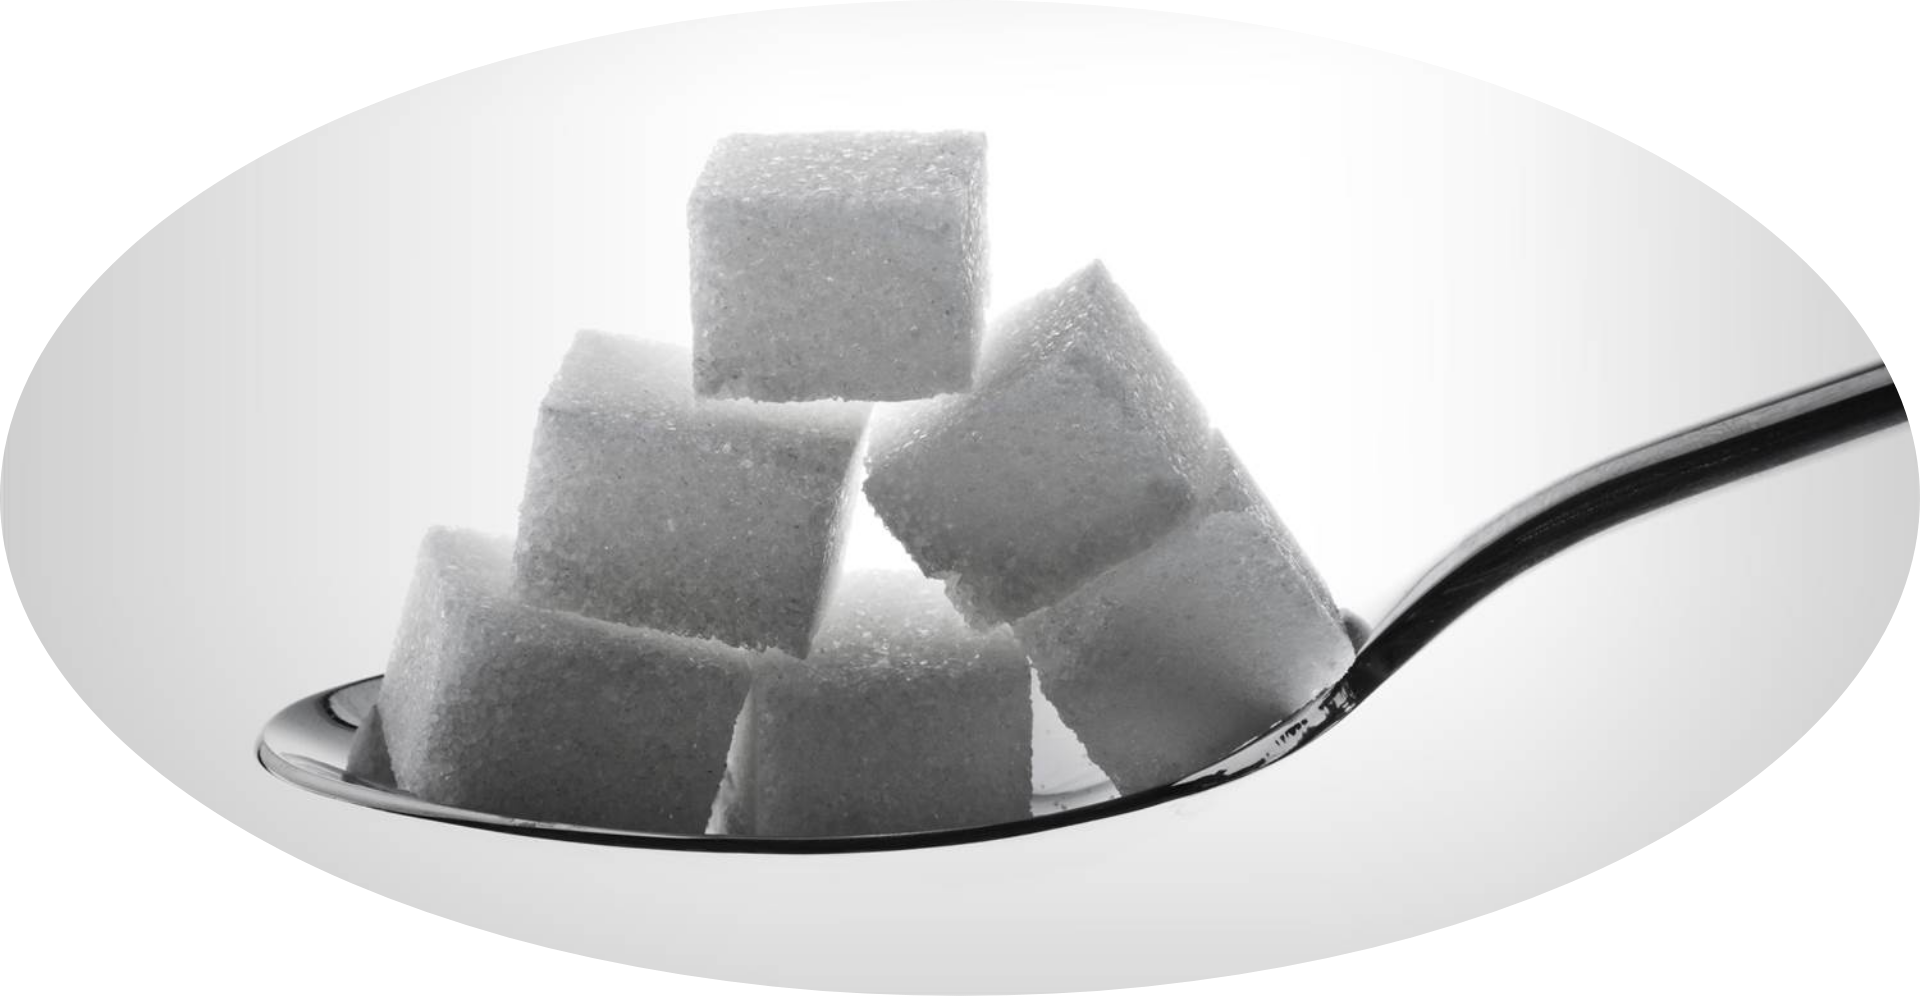 Sugar 11. Цукор темный. This is сахар. Сахар 11,8. Пачки с сахарозой.